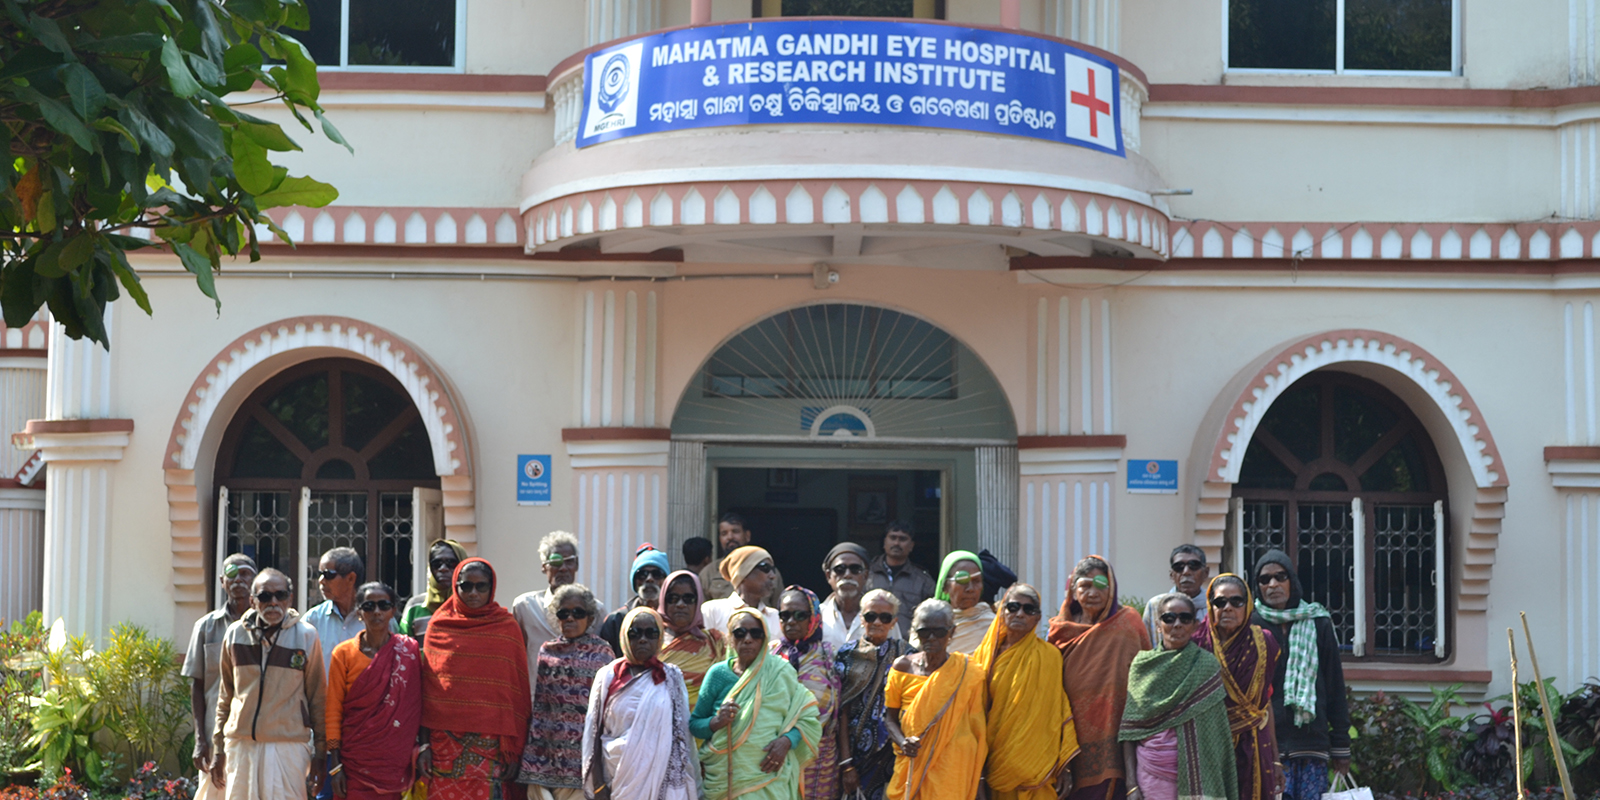 Mahatma Gandhi Eye Hospital and Research Centre